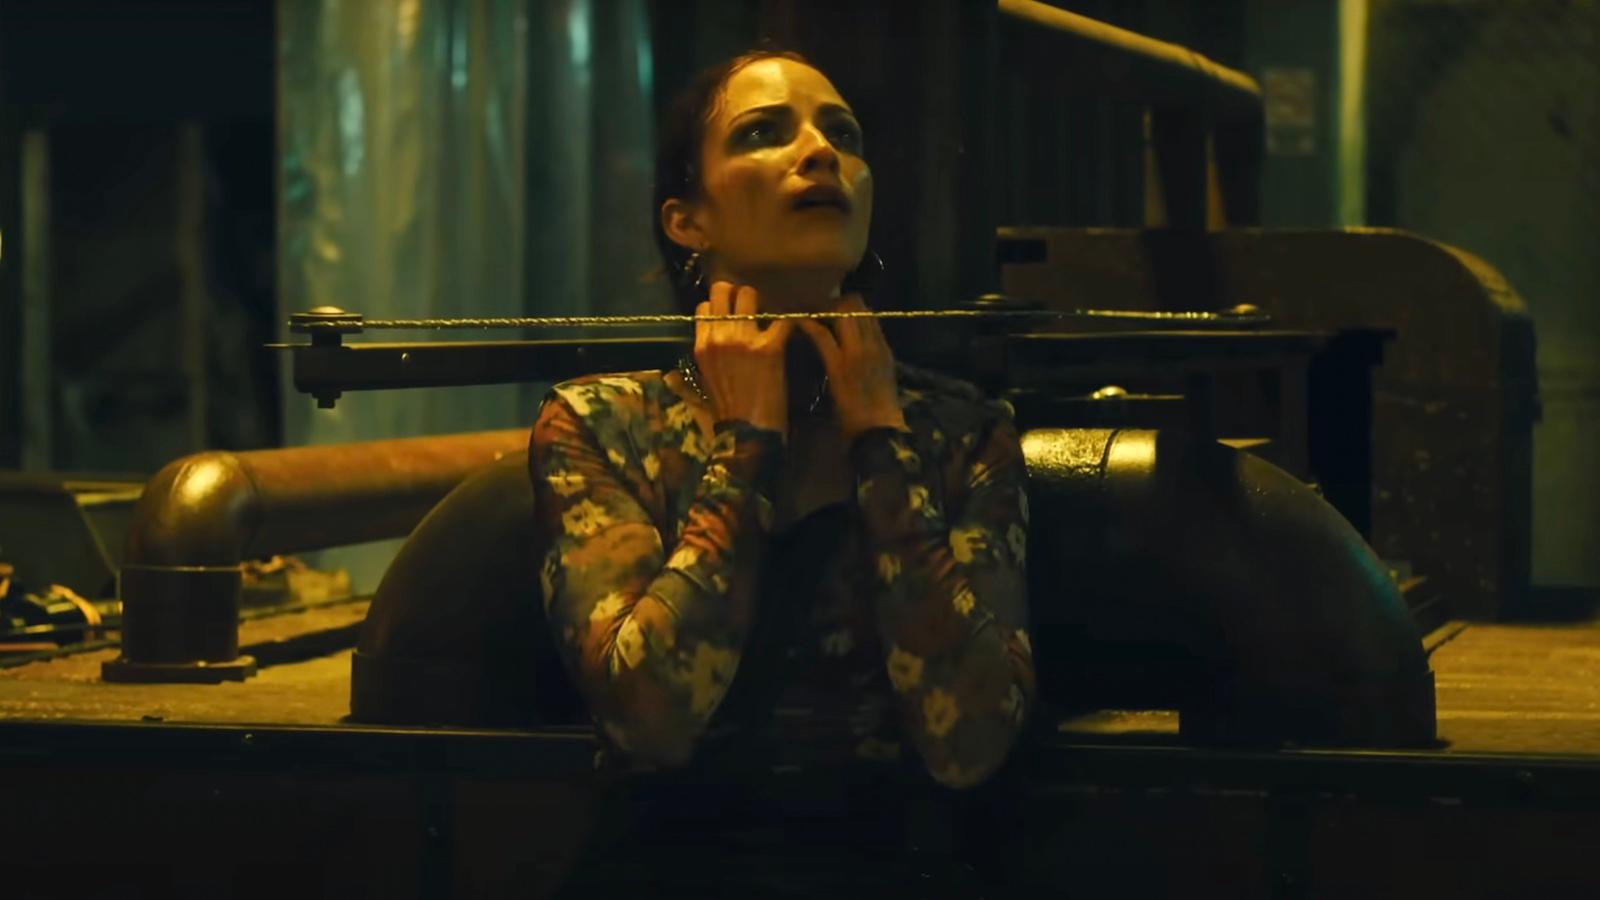 Saw X Trailer Teases Horrifying Return of Jigsaw and Amanda: Watch